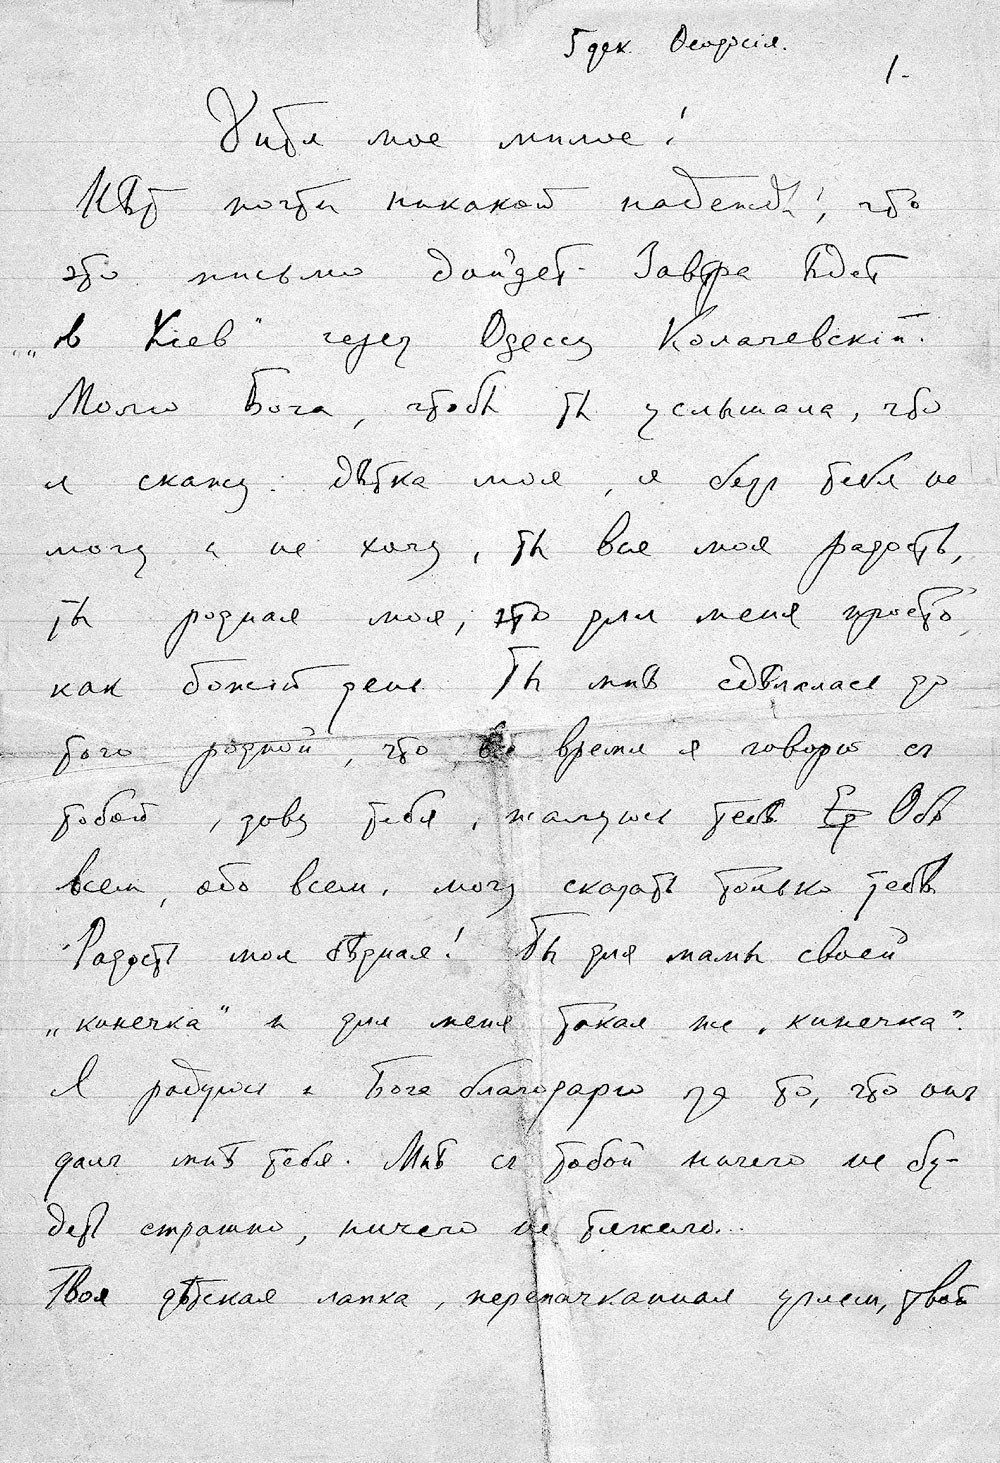 Una lettera di Osip Mandelshtam a Nadezhda, 5 dicembre 1919
